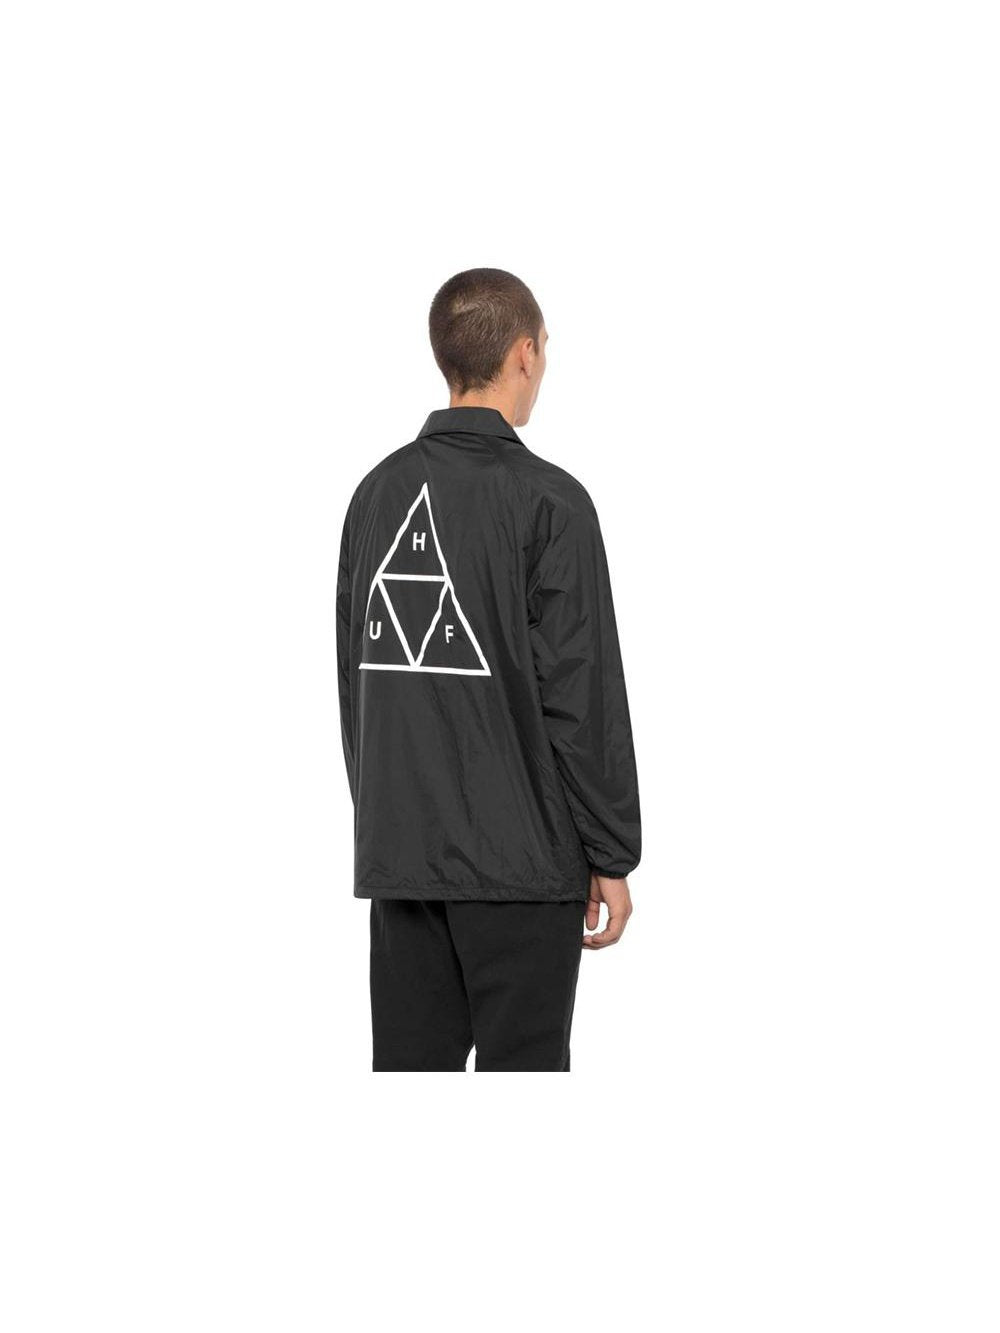 Huf Essentials Triple Triangle Coaches Jacket Black JK00116.